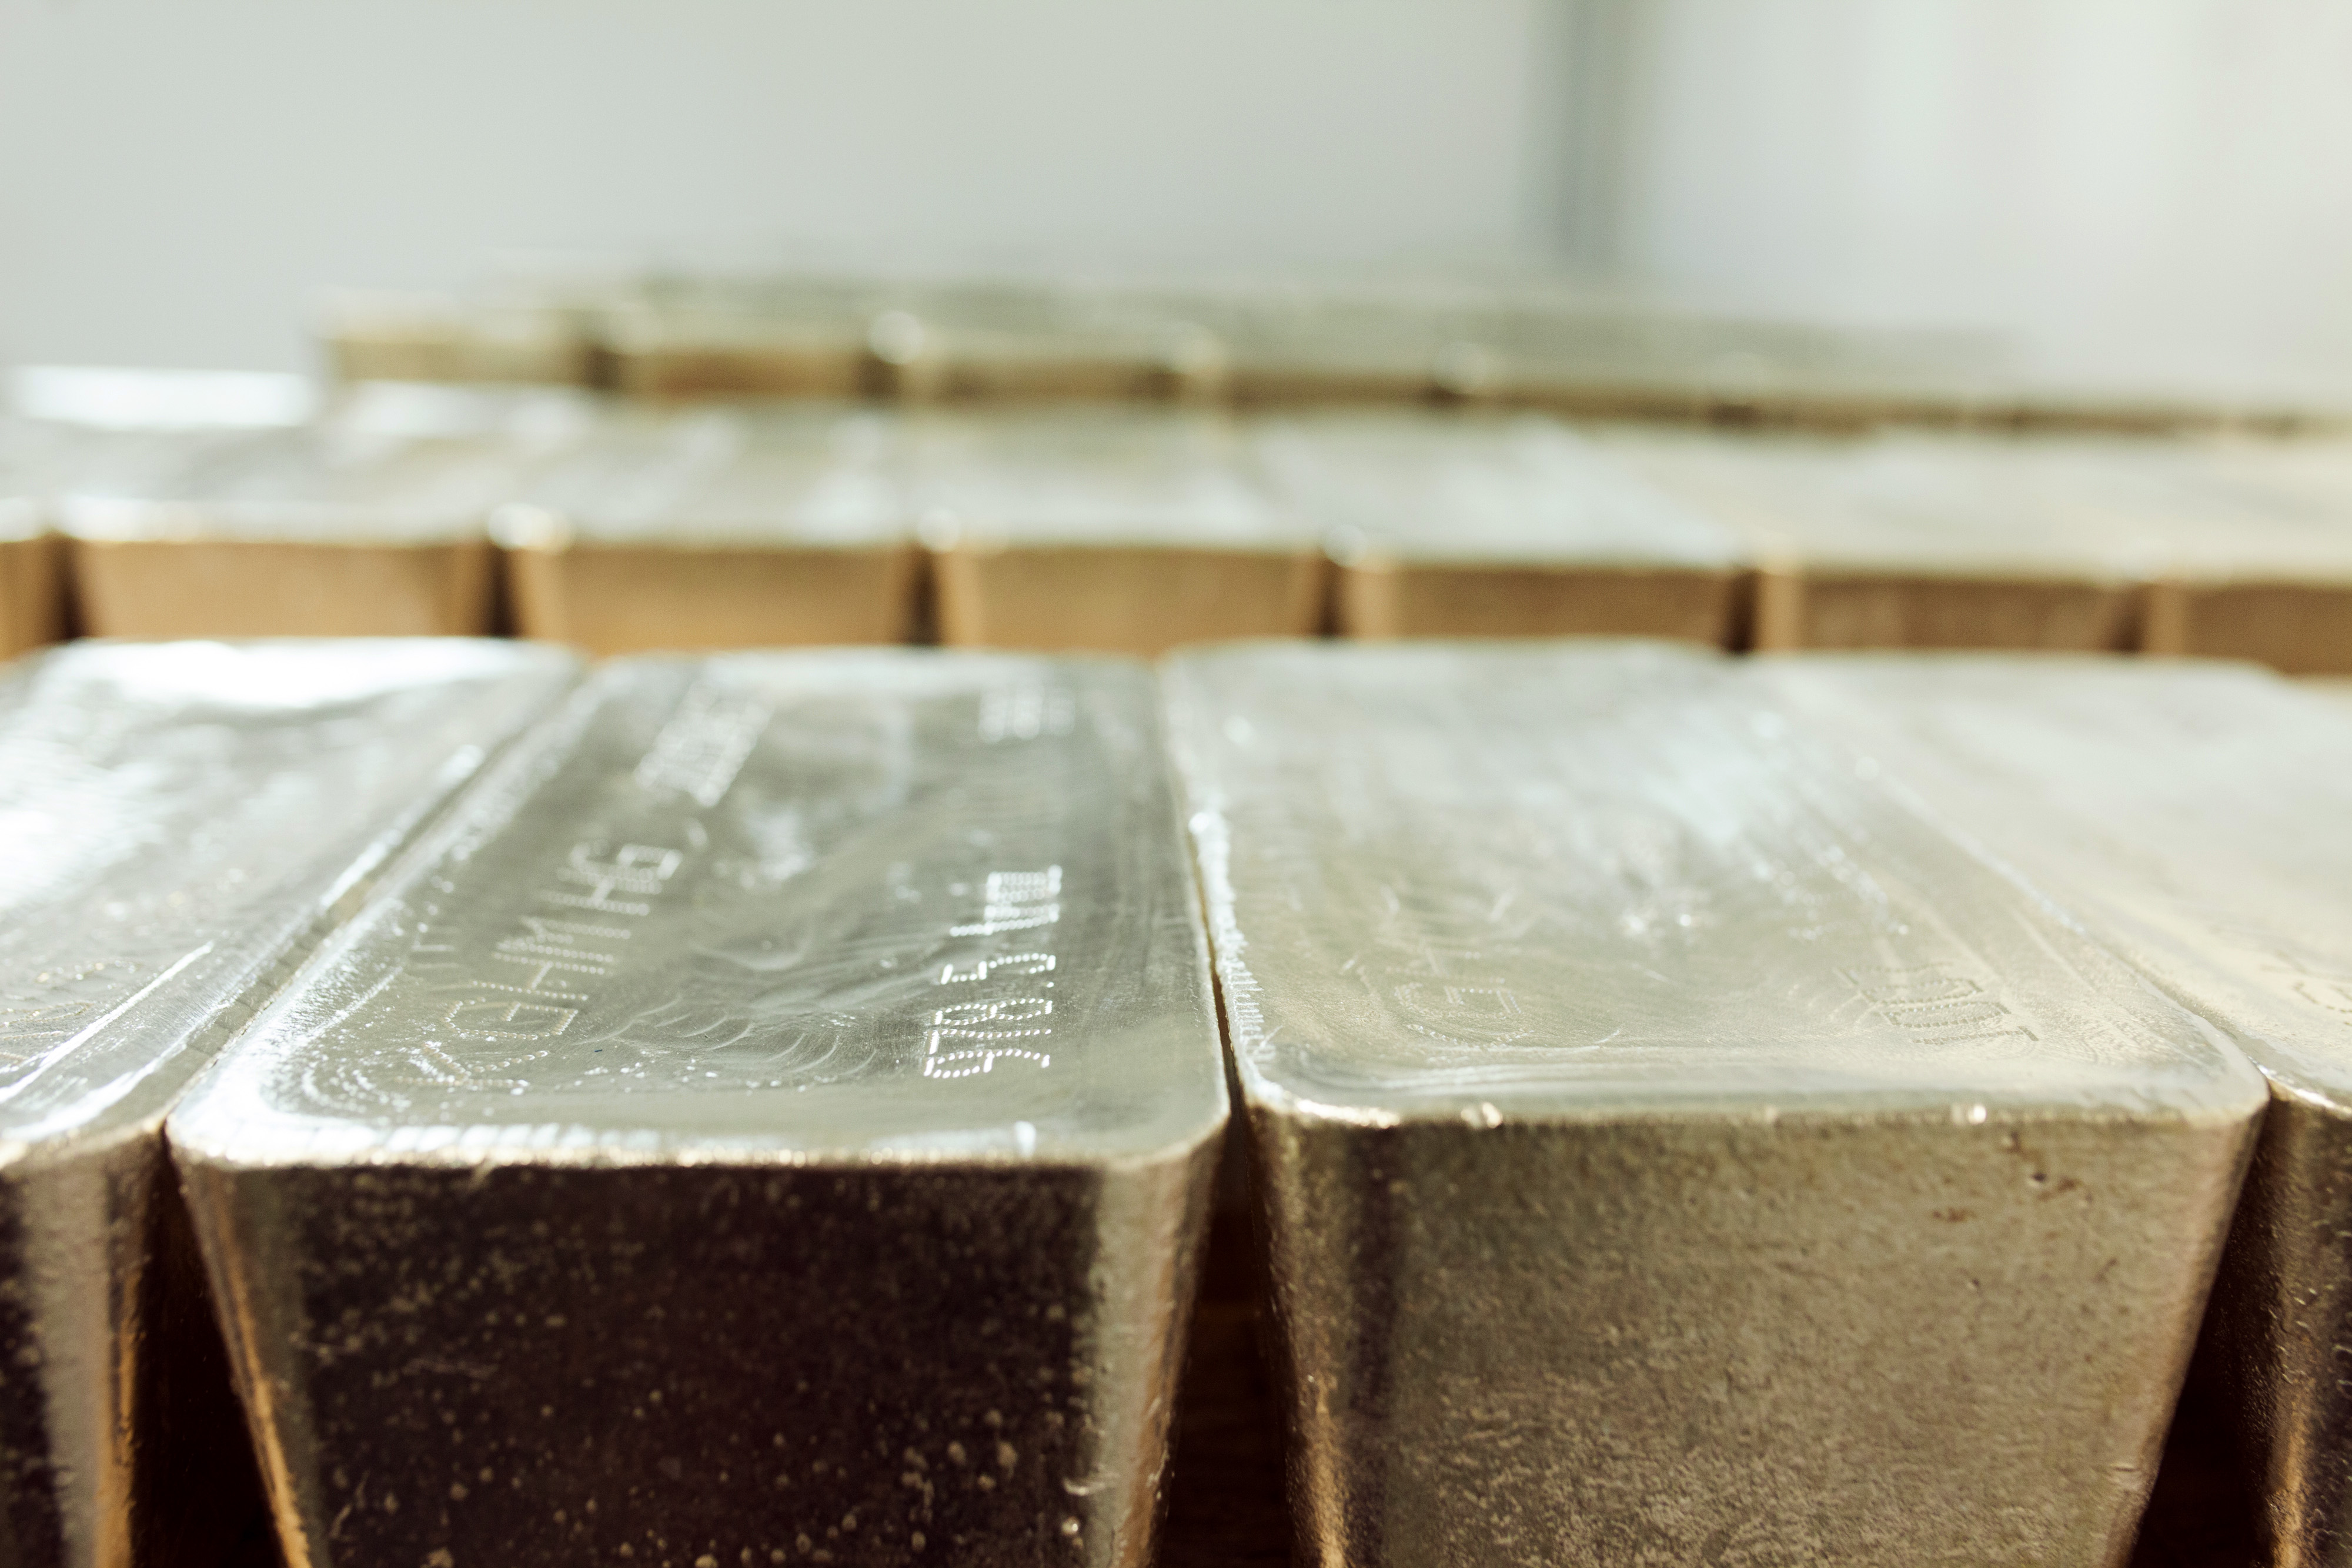 Copper, Gold And Silver Bullion Manufacture At KGHM Polska Miedz SA Smelting Plant